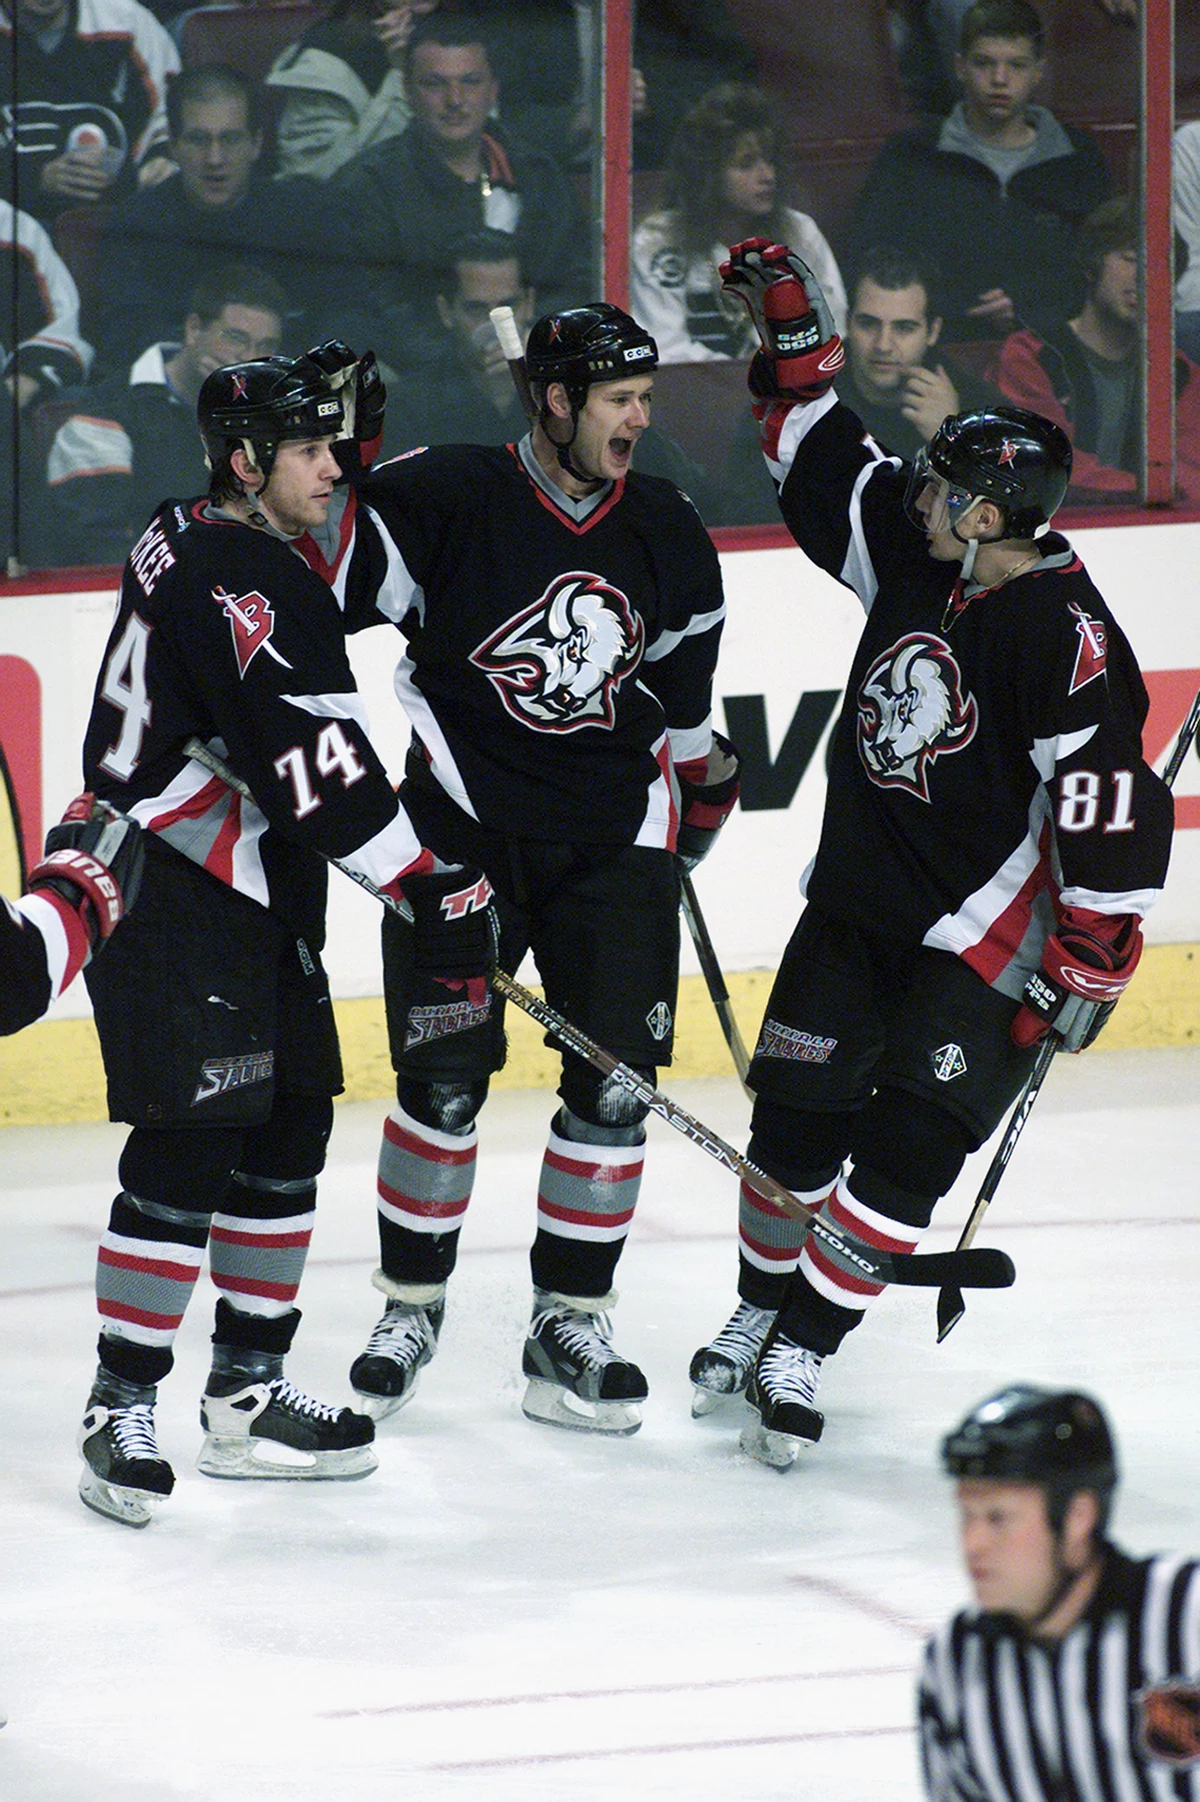 Report: Sabres to bring back '90s black jersey